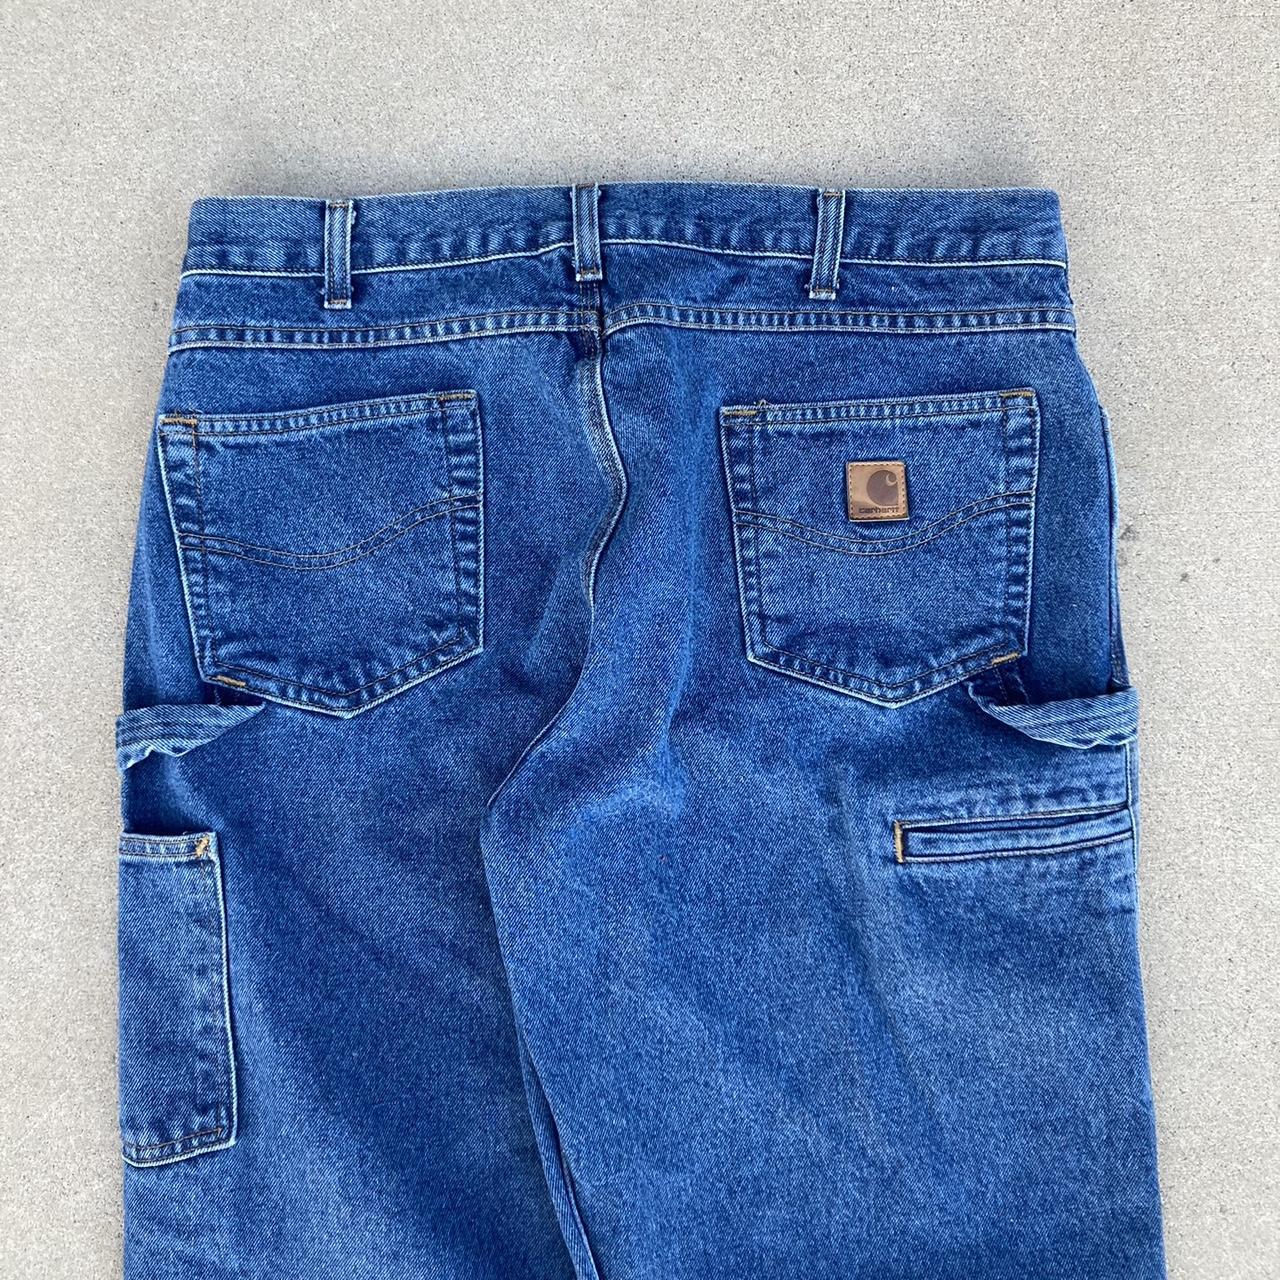 Carhartt Men's Blue and Navy Jeans | Depop